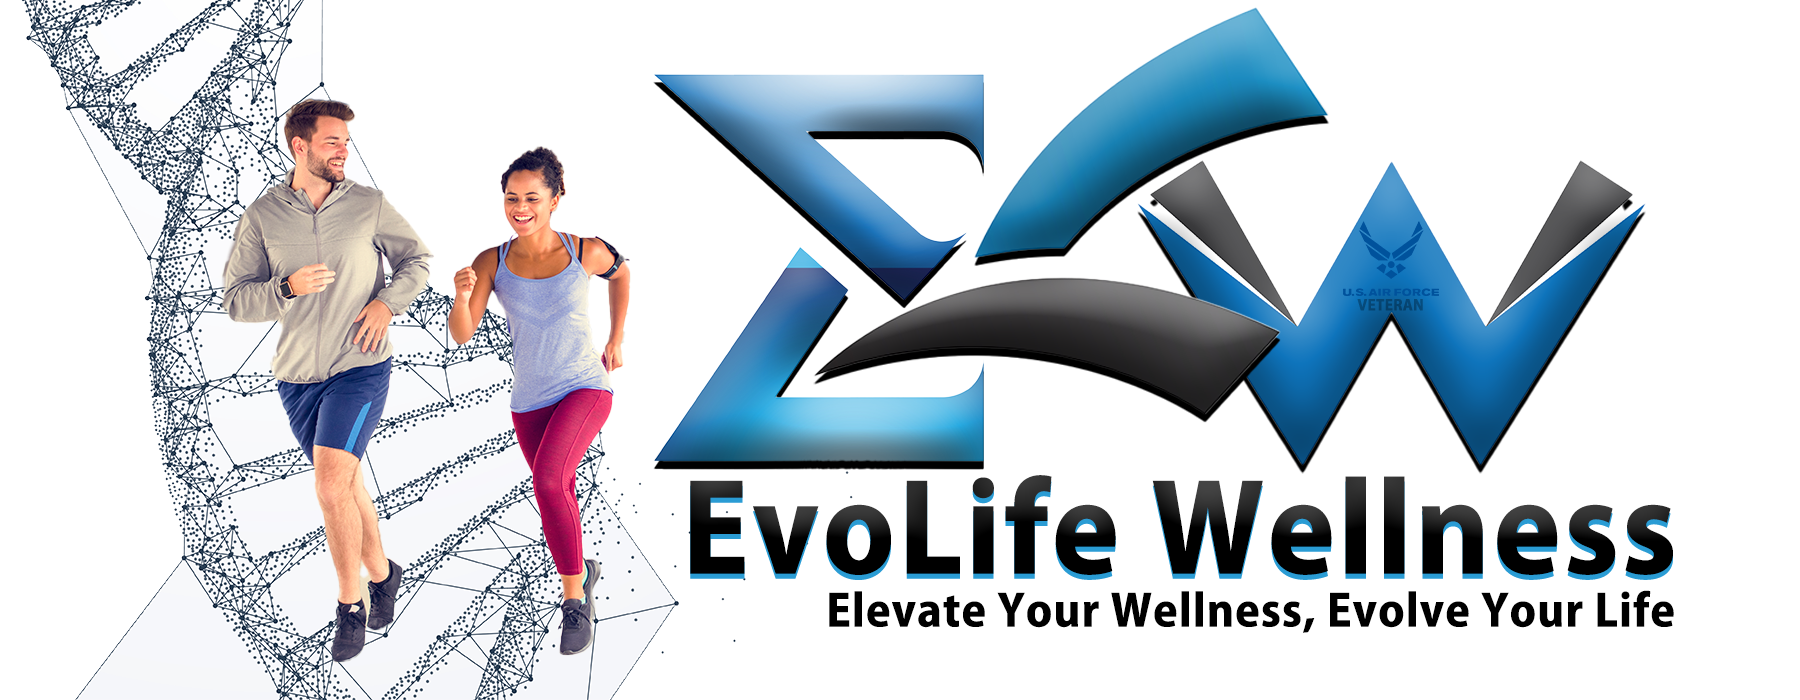 Evolife Wellness Home Page banner image